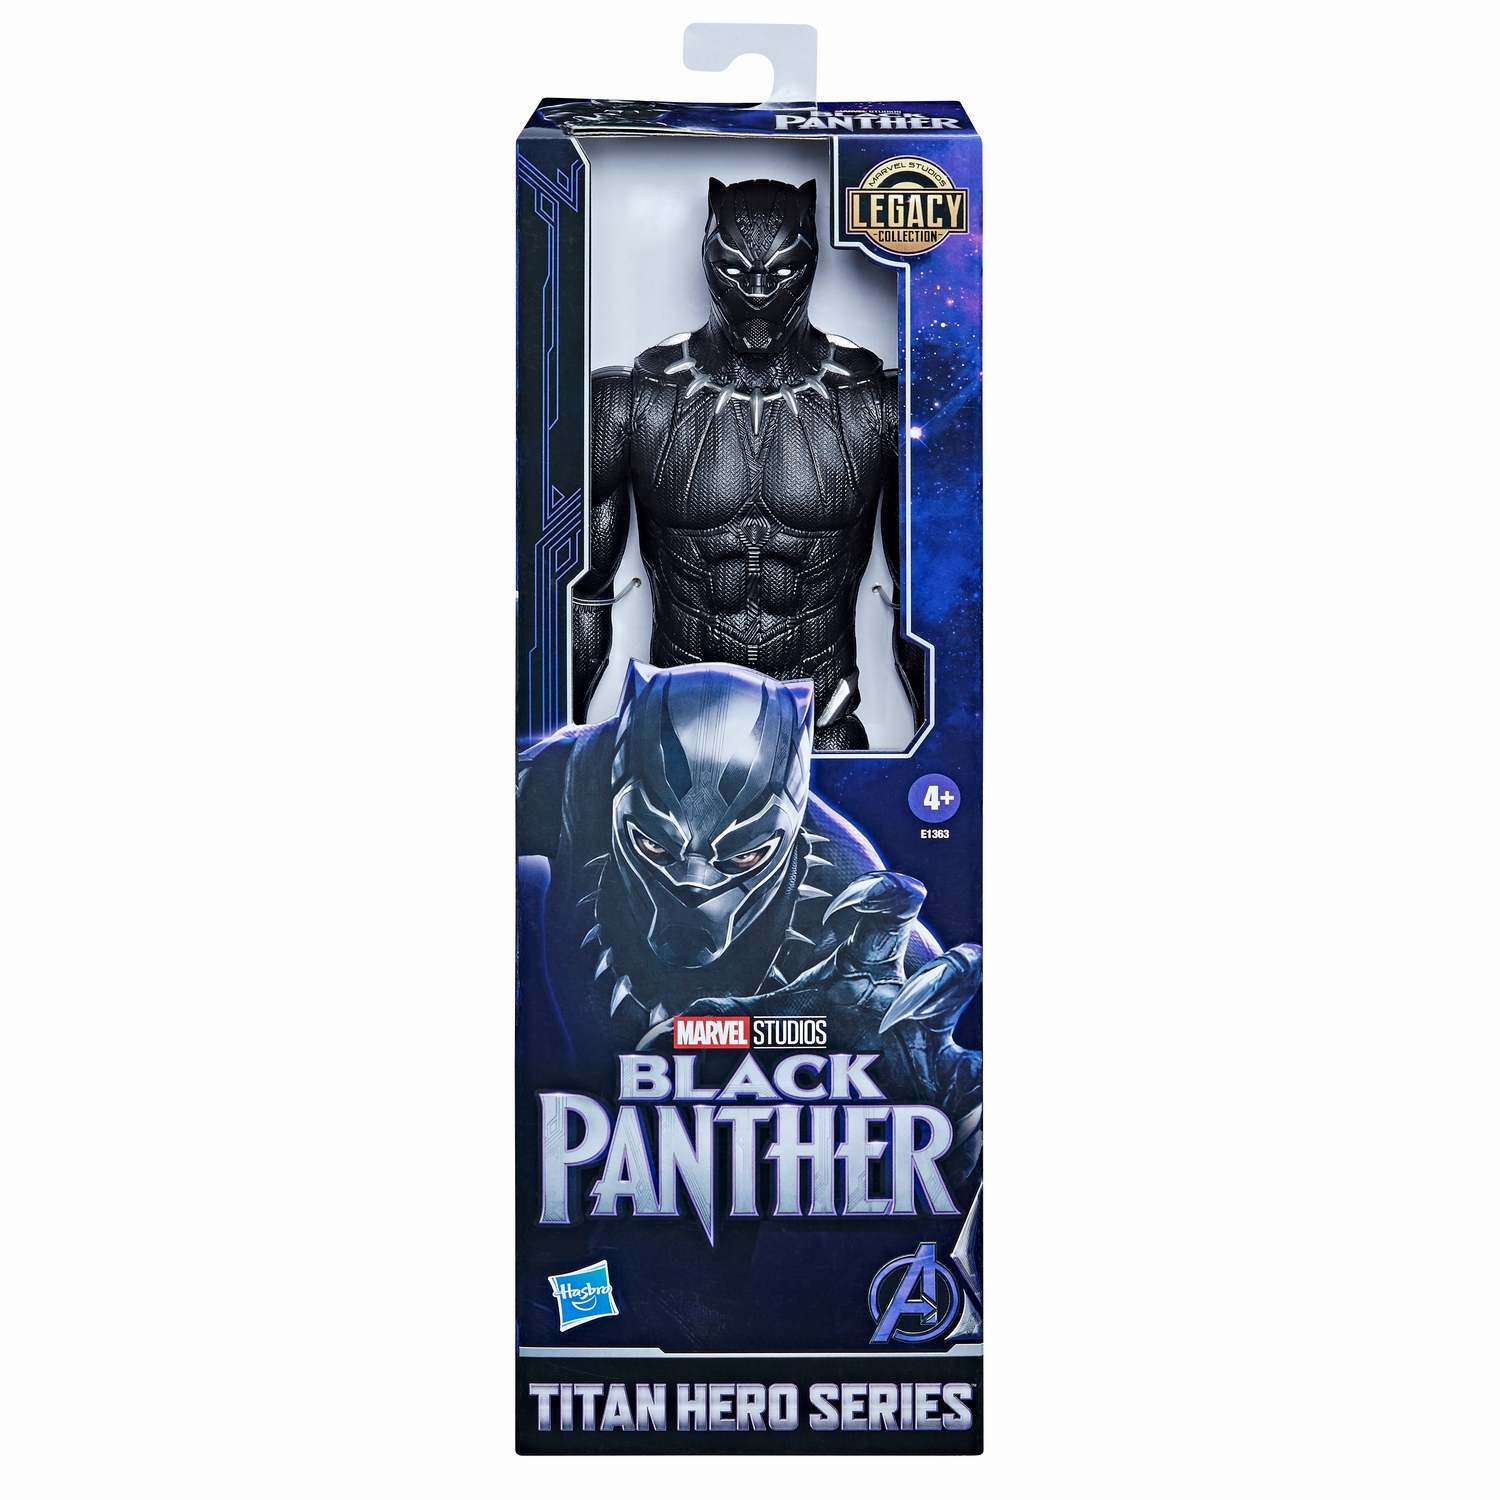 Marvel Black Panther Marvel Studios Legacy Collection Titan Hero Series Black Panther Figure - 2.jpg